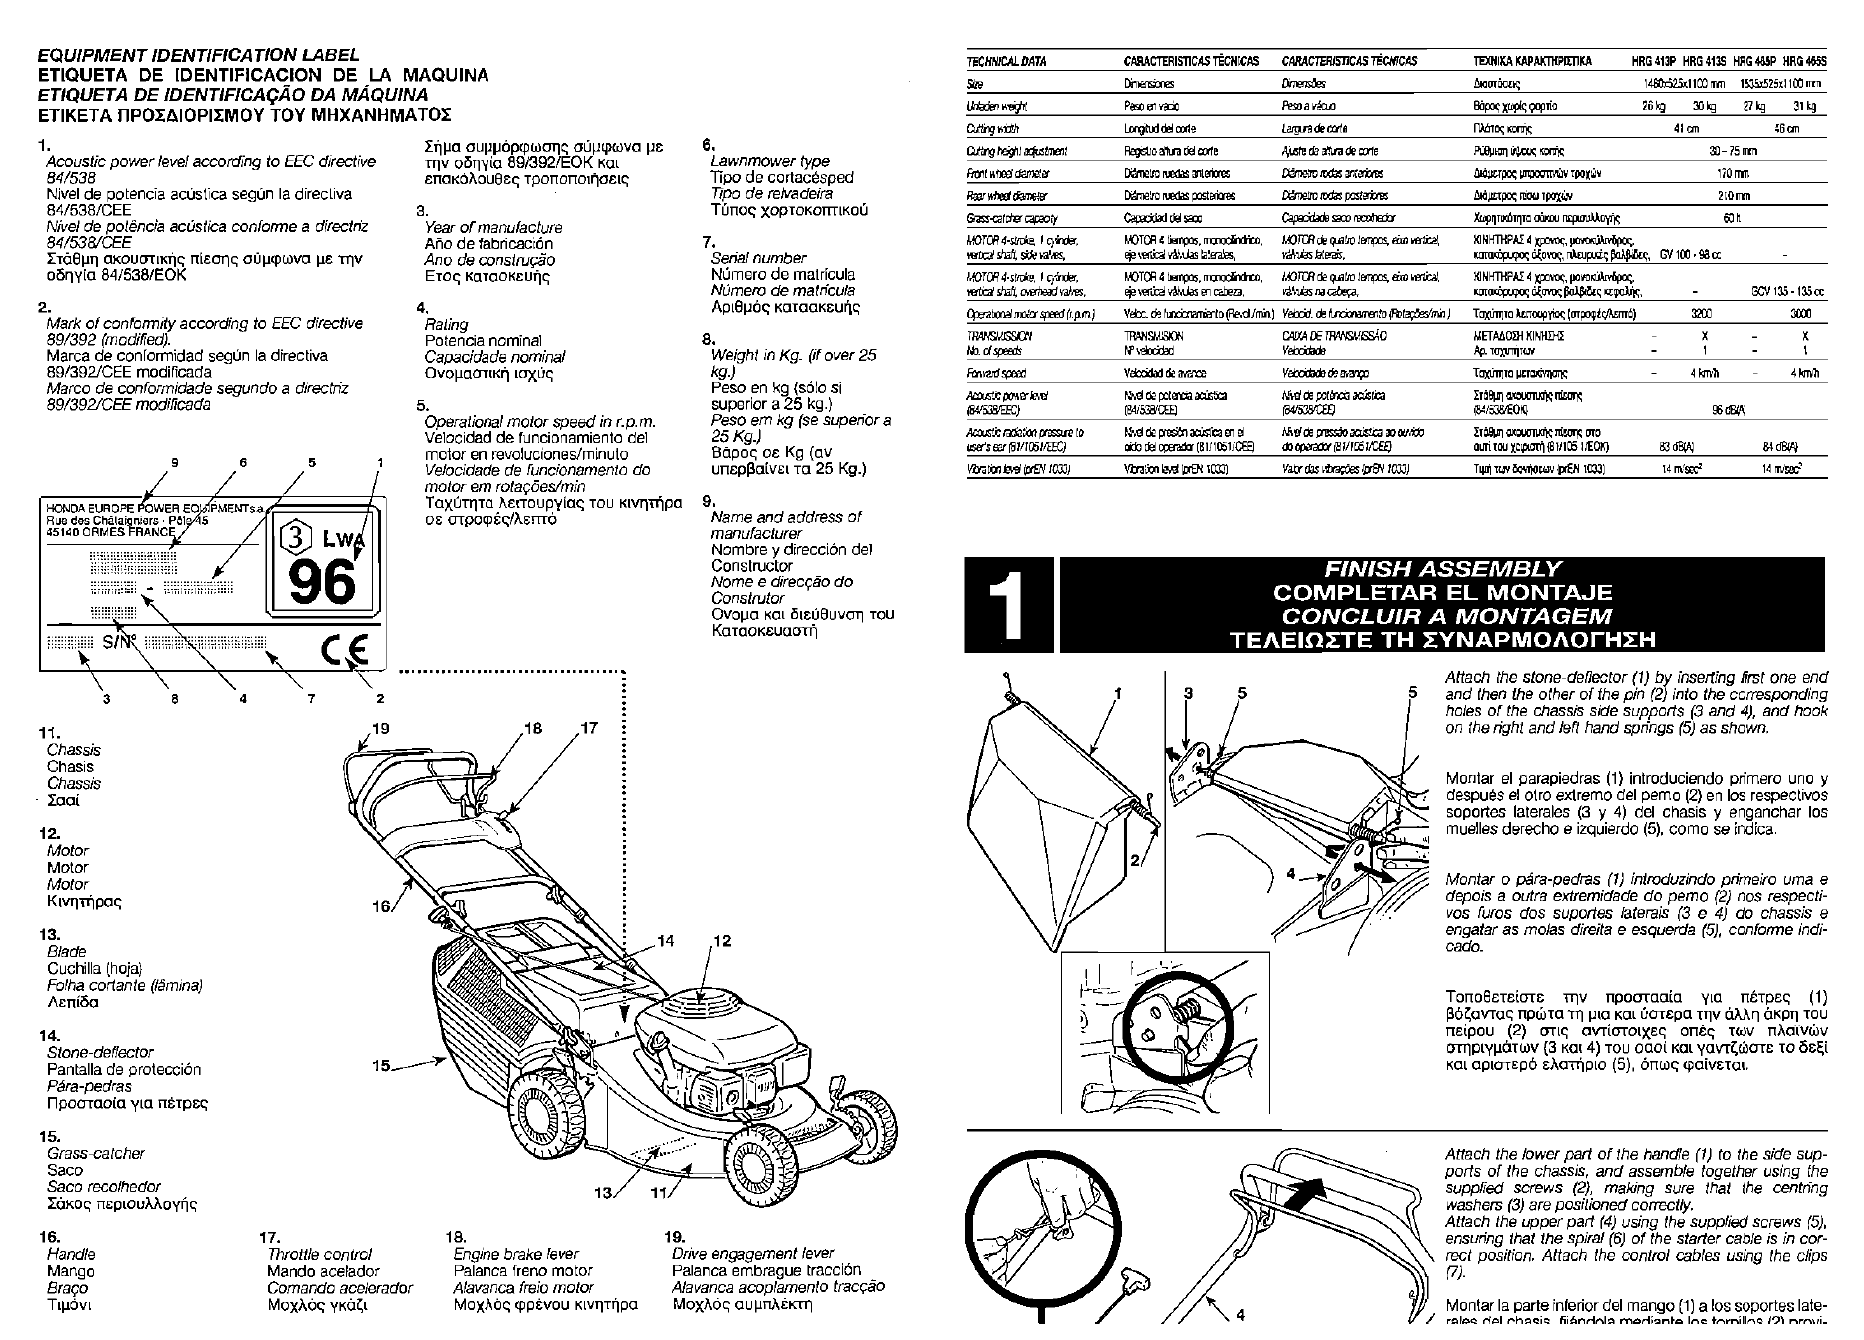 Manual Honda HRG413 (page 1 of 8) (English, Portuguese, Spanish)